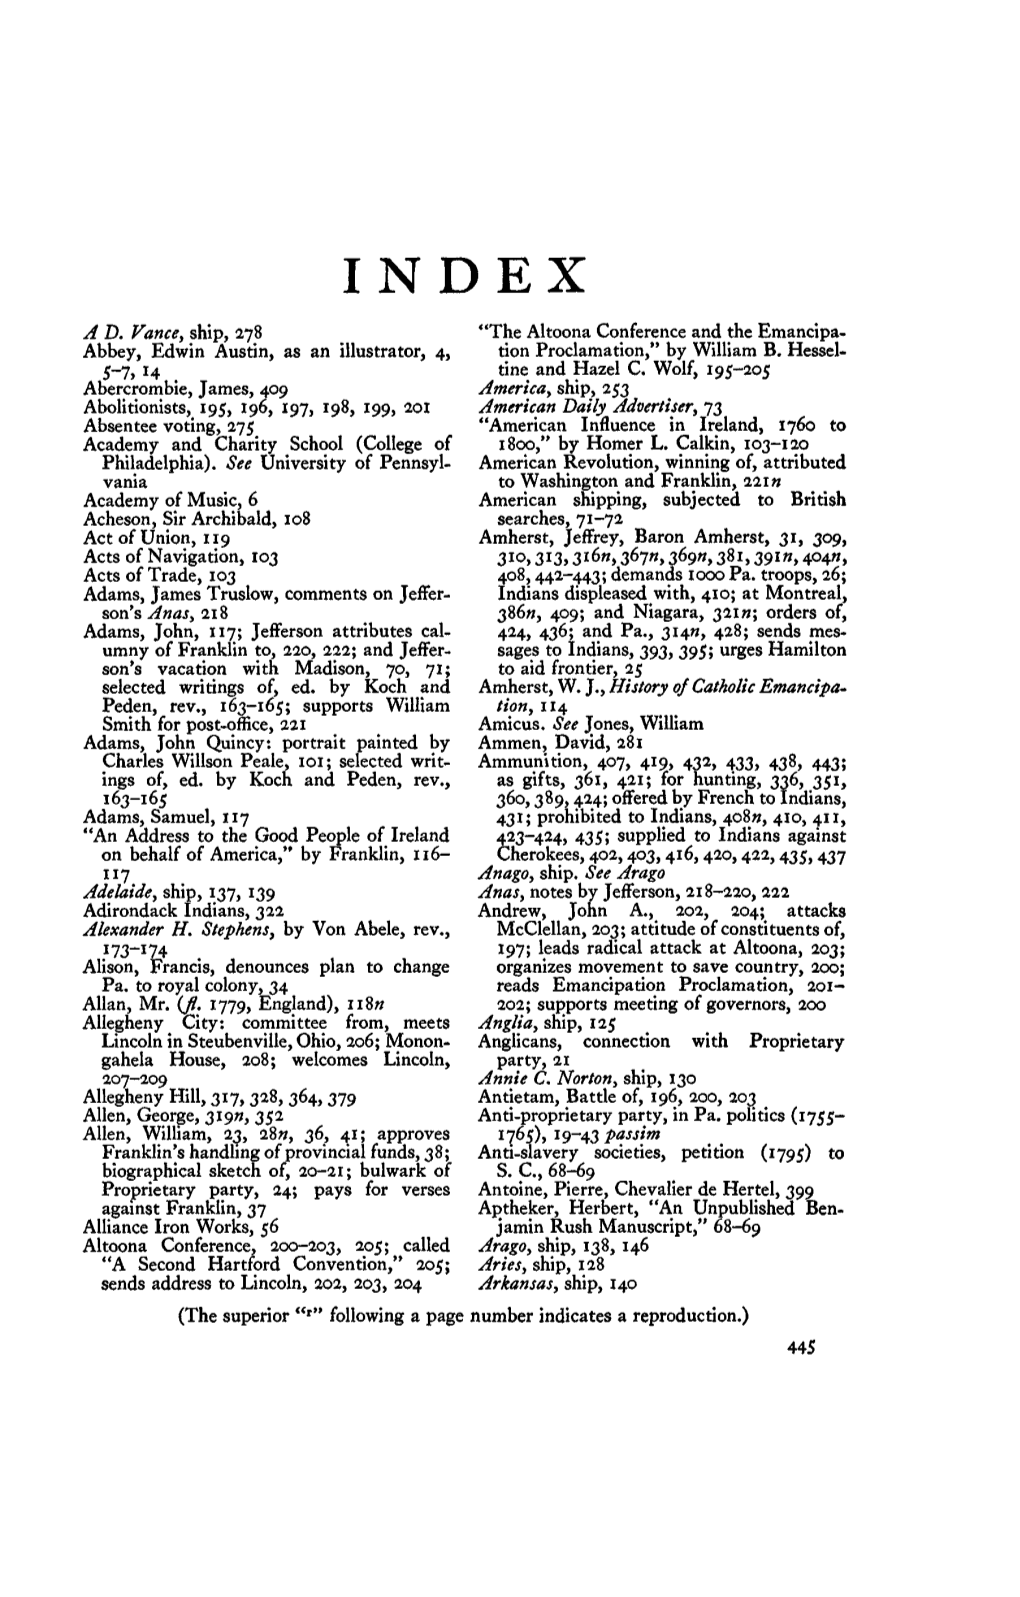 A D. Vance, Ship, 278 Abbey, Edwin Austin, As an Illustrator, 4, 5-7, 14 Abercrombie, James, 409 Abolitionists, 195, 196, 197, 1